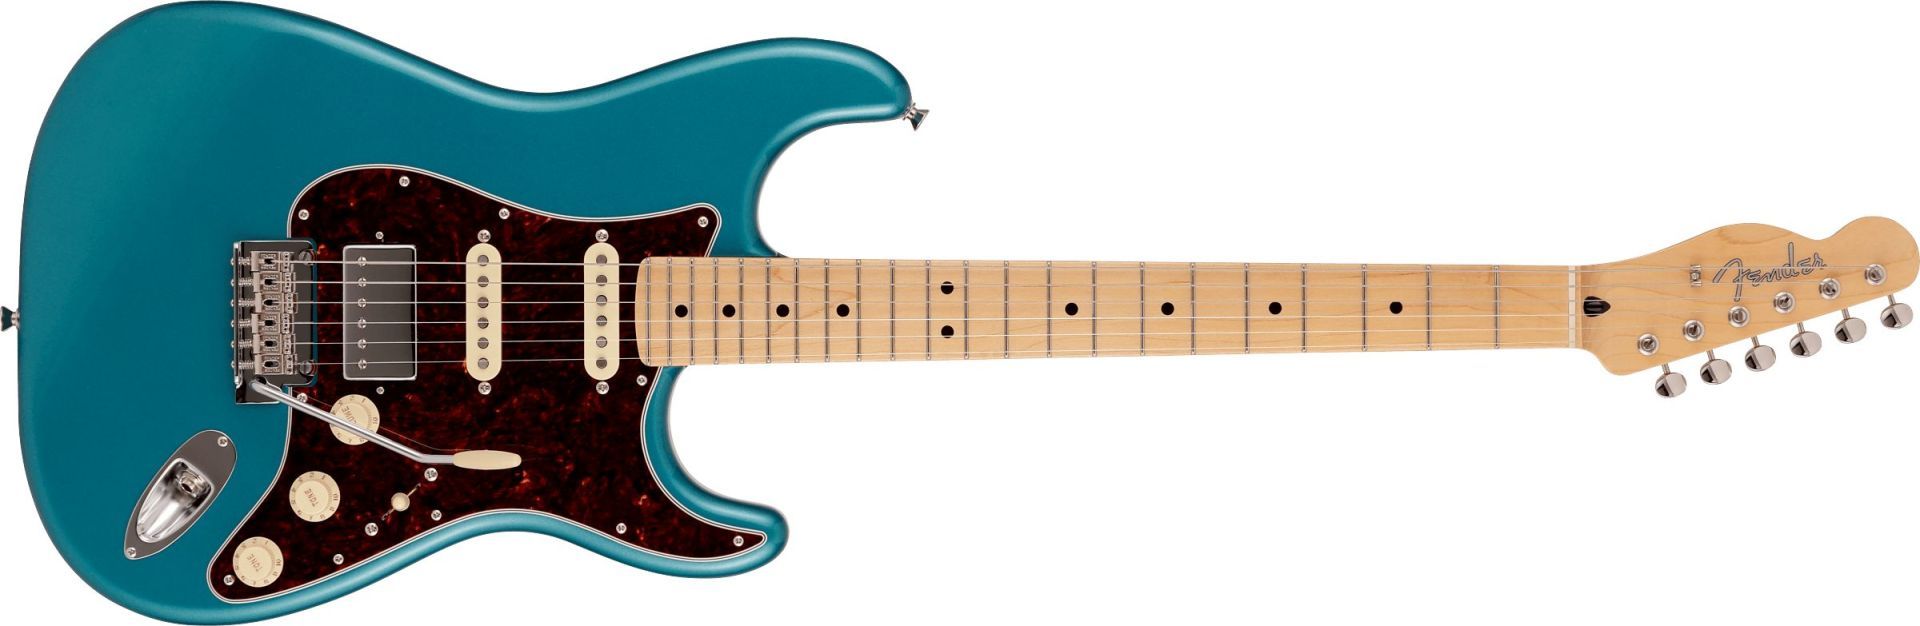 Fender Limited Edition Made in Japan Hybrid II Stratocaster HSS Reverse Telecaster Headstock Ocean Blue Metallic